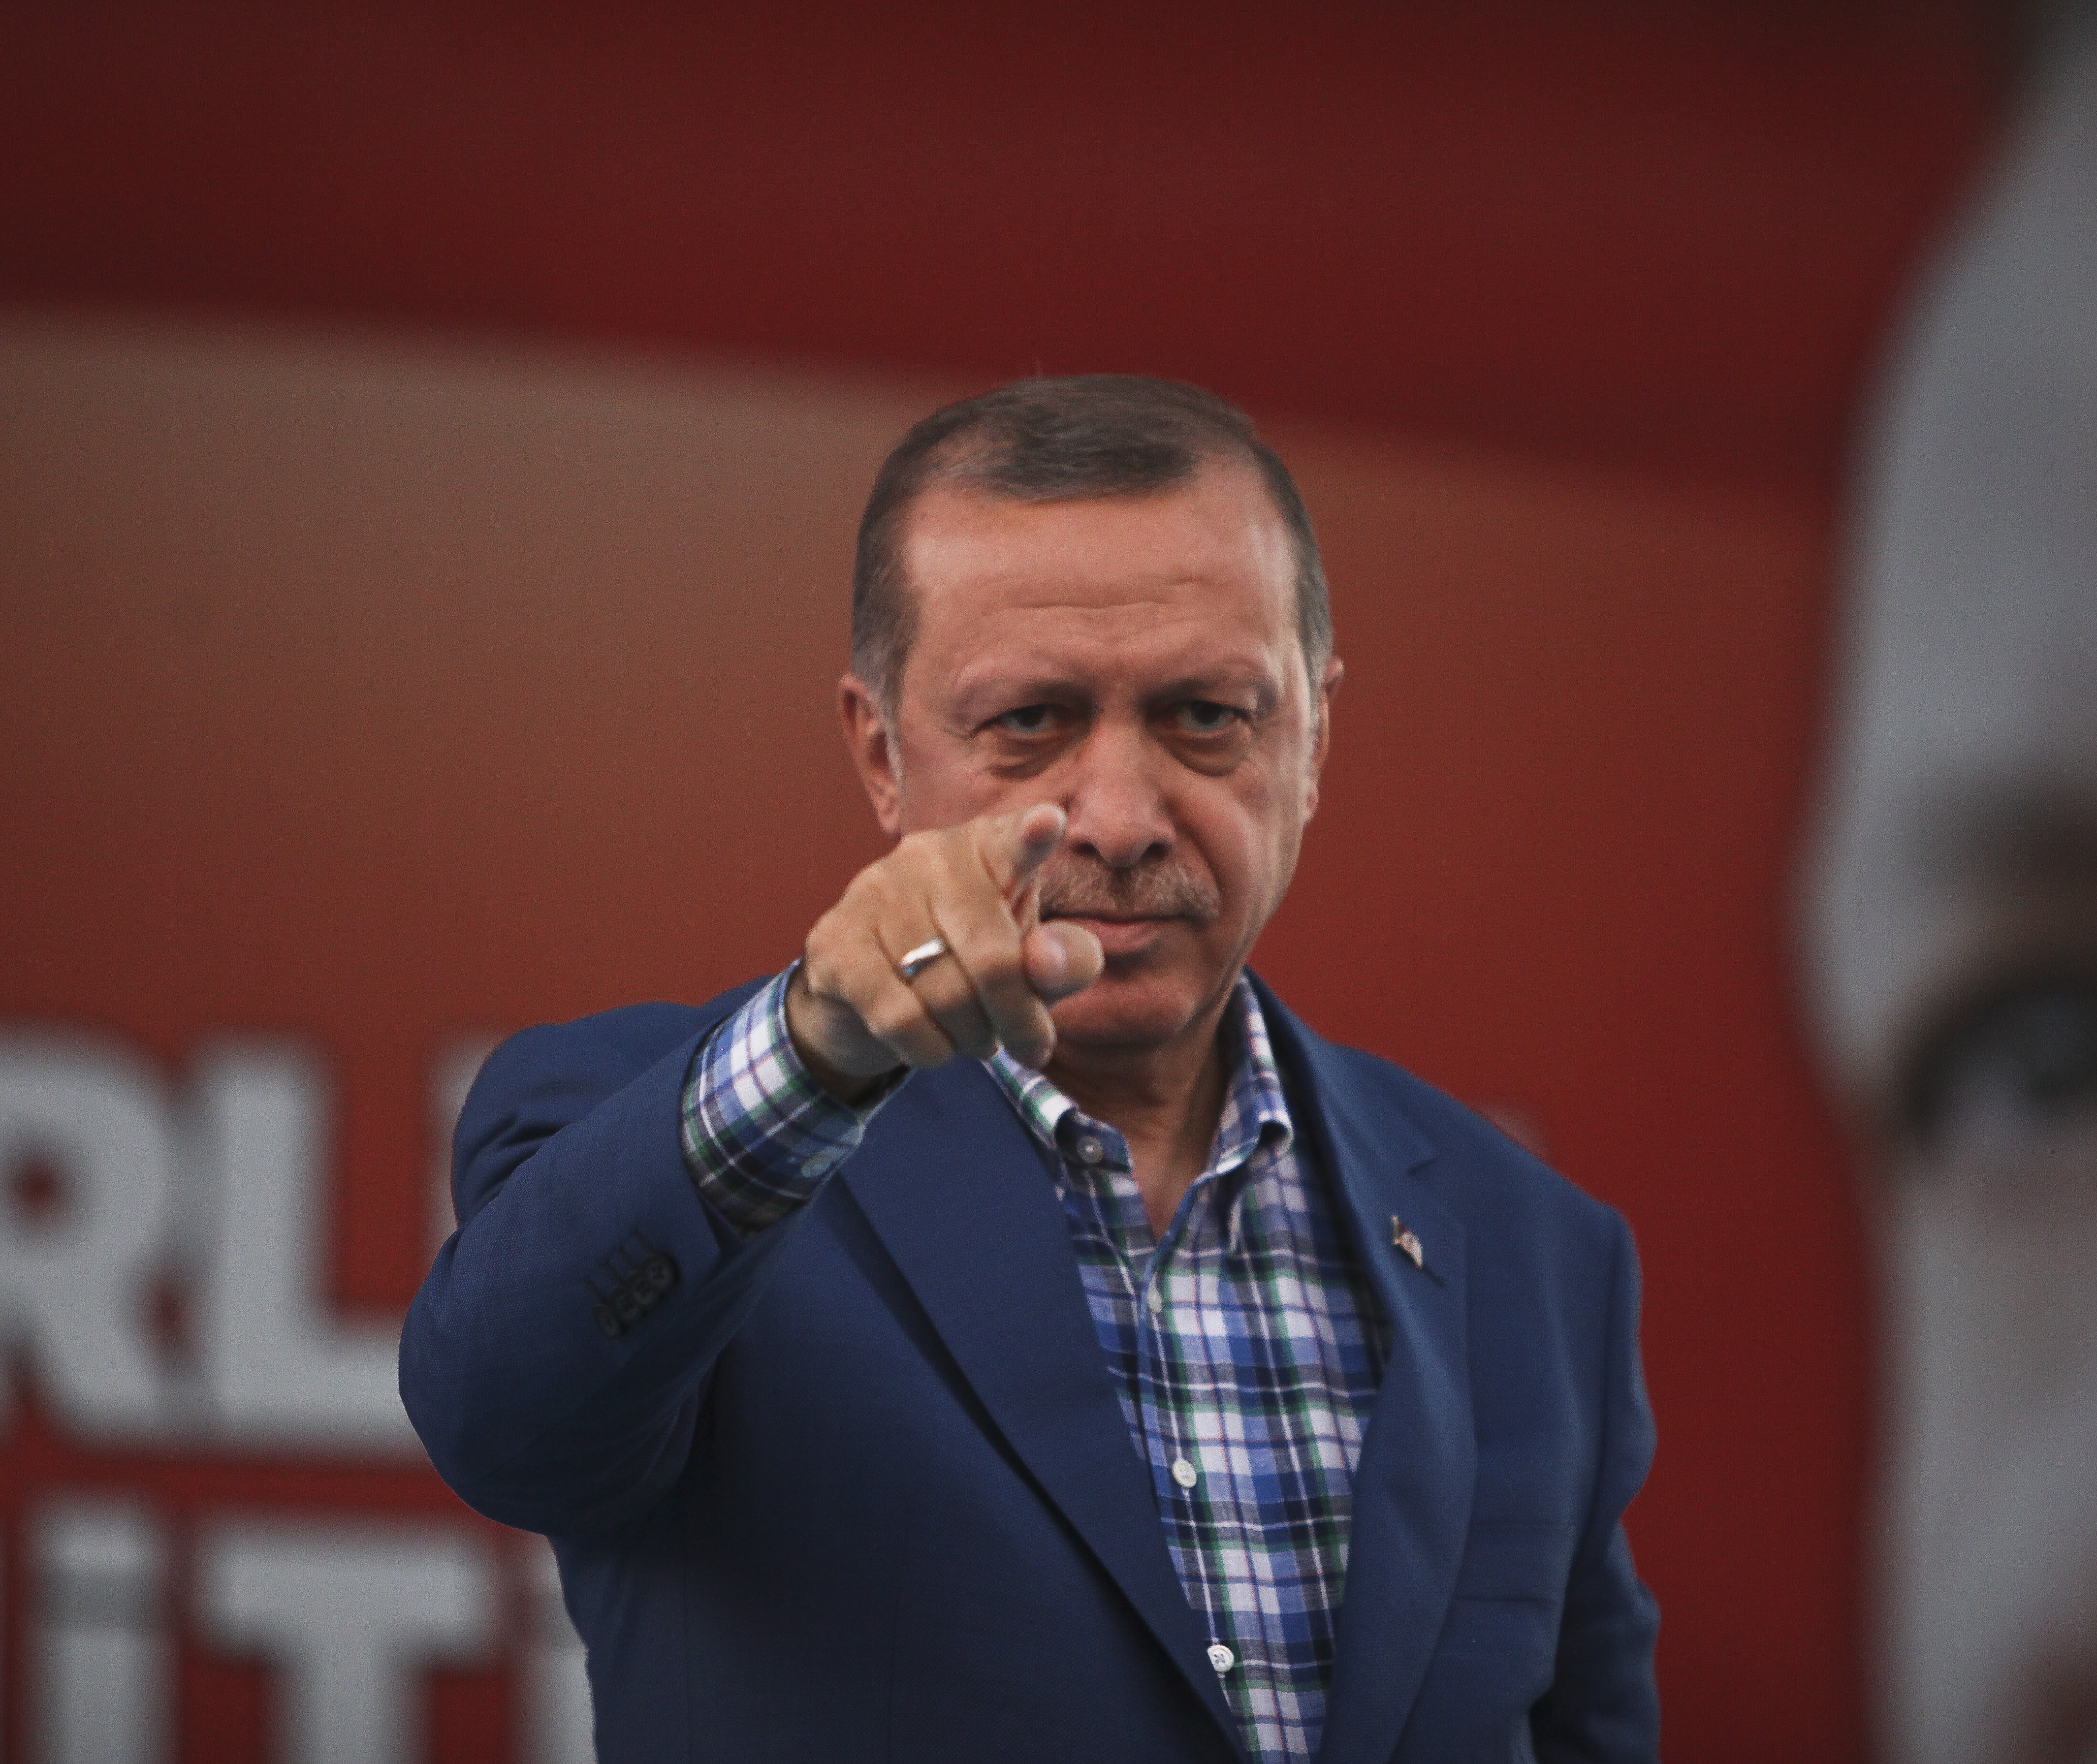 German dentist gets 16-month suspended sentence for Erdoğan insult, other charges 29